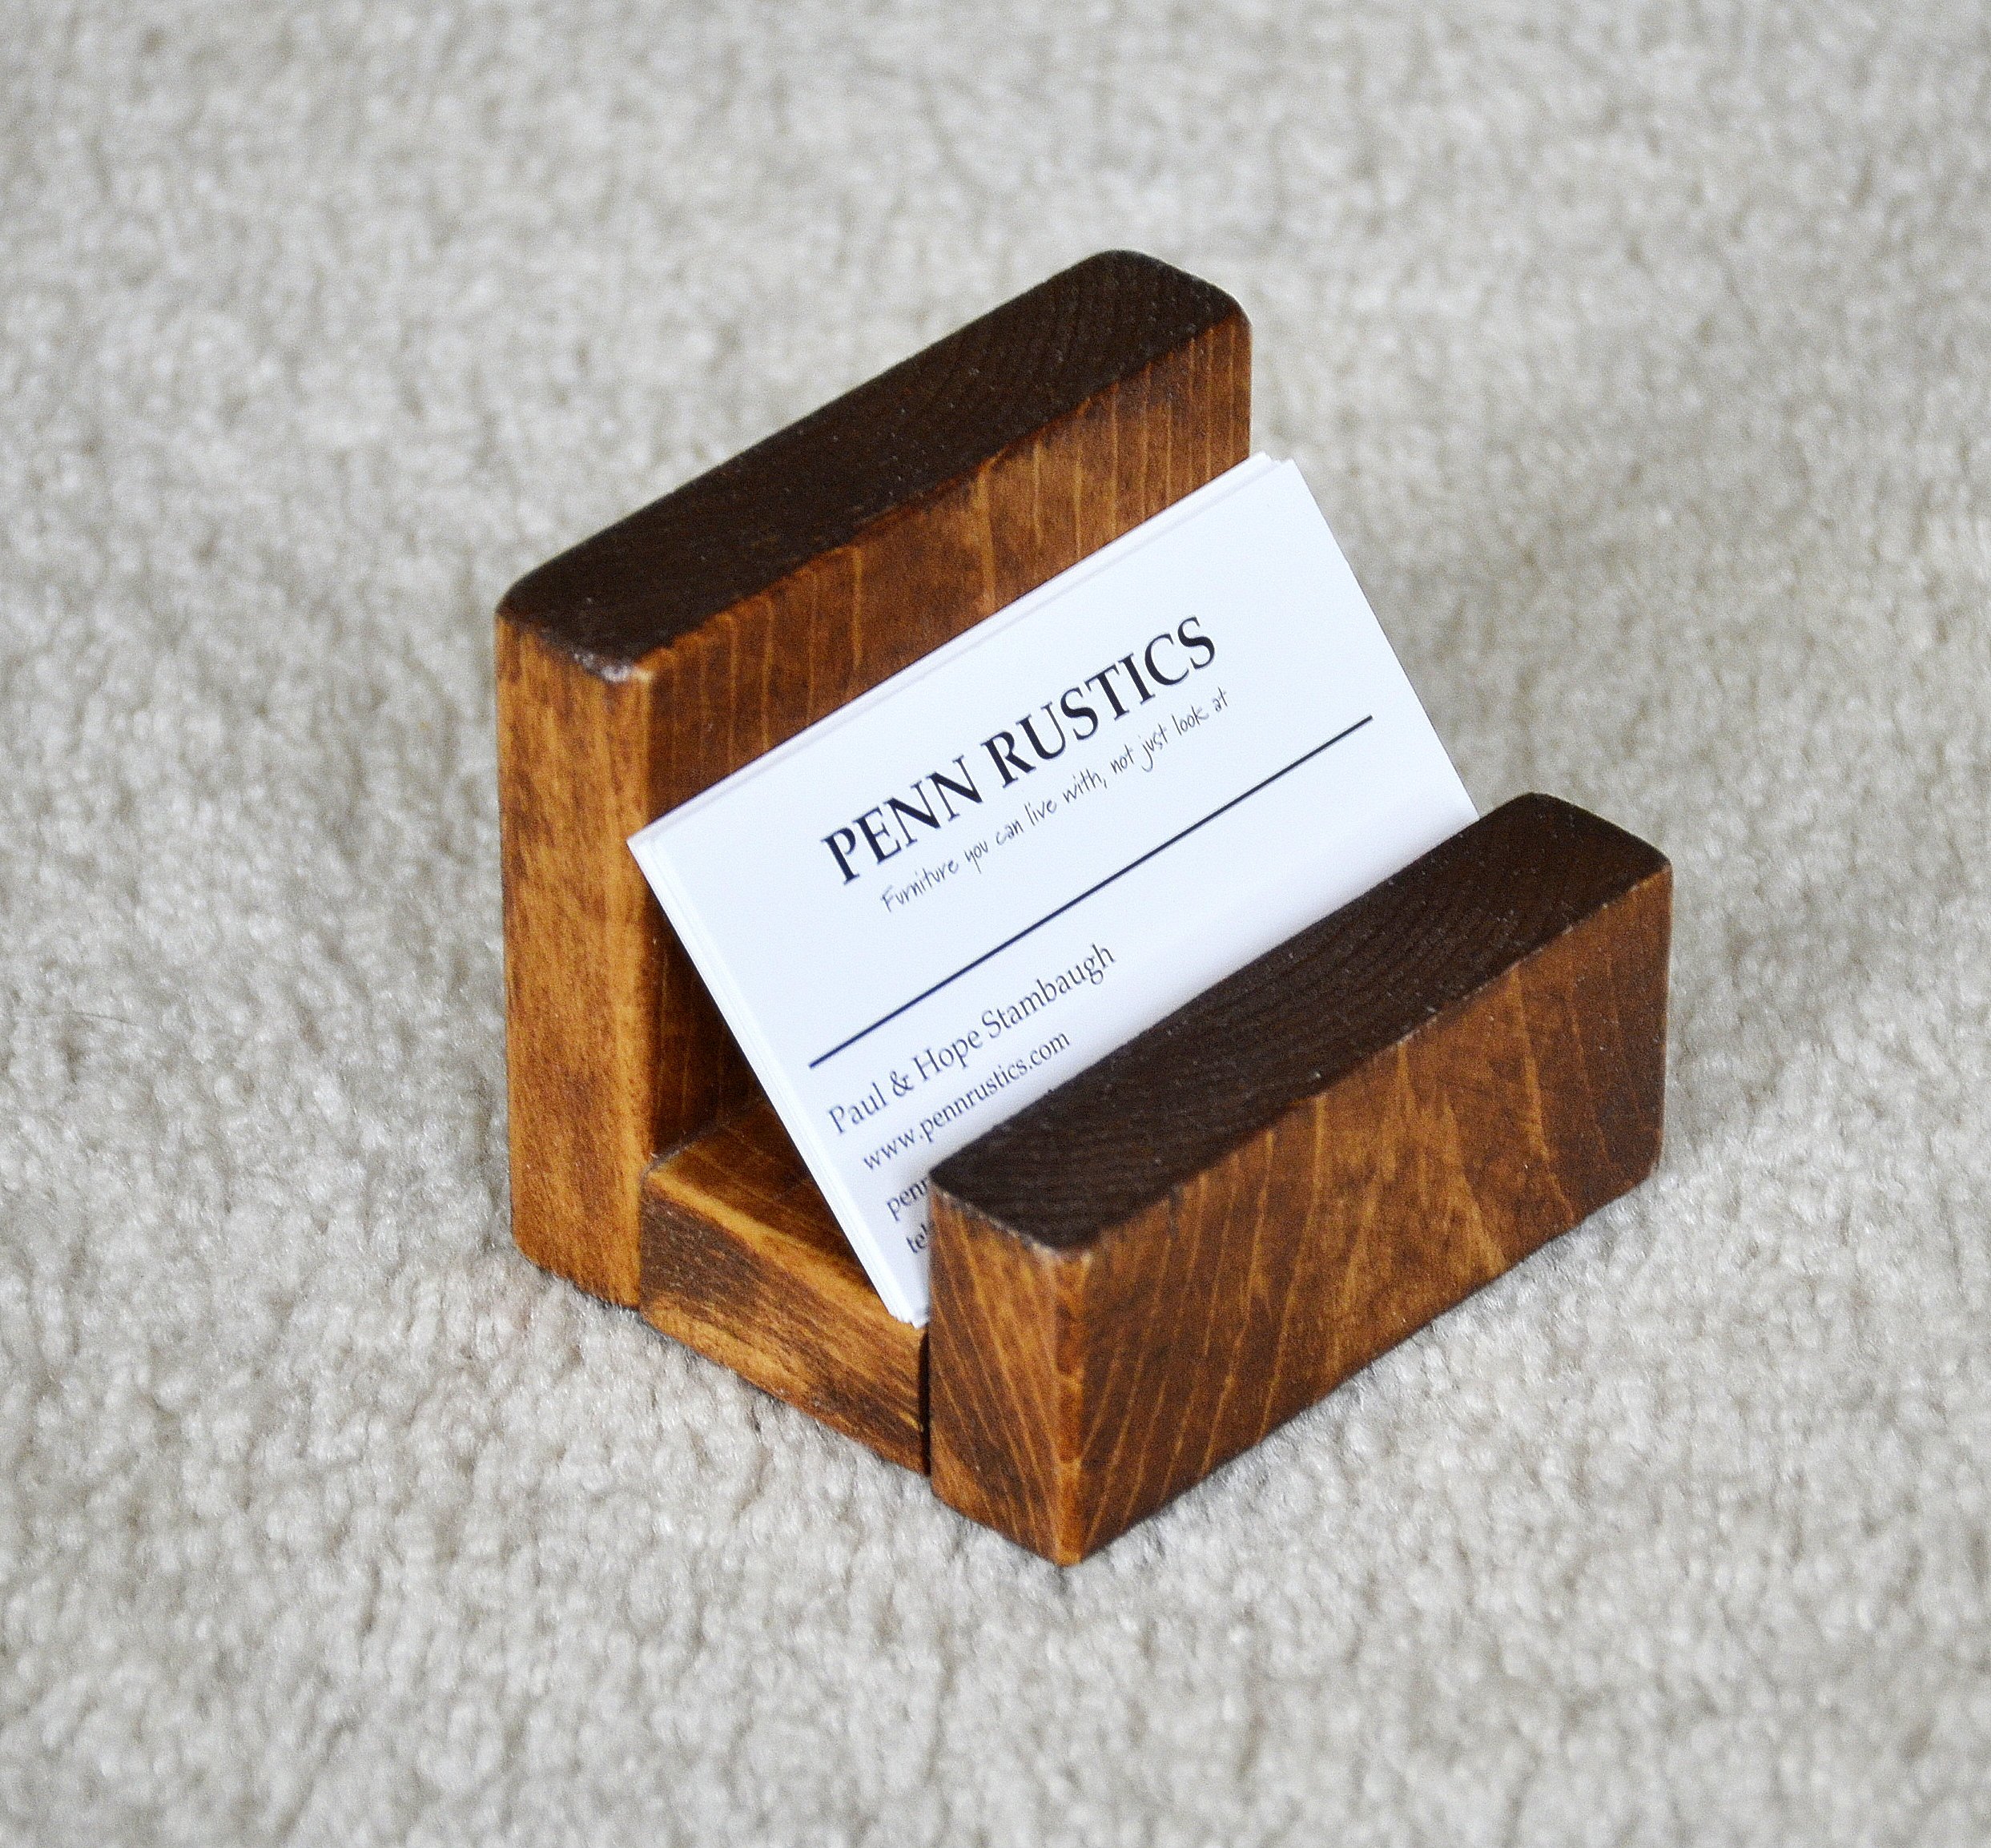 Business Card Holder — Penn Rustics